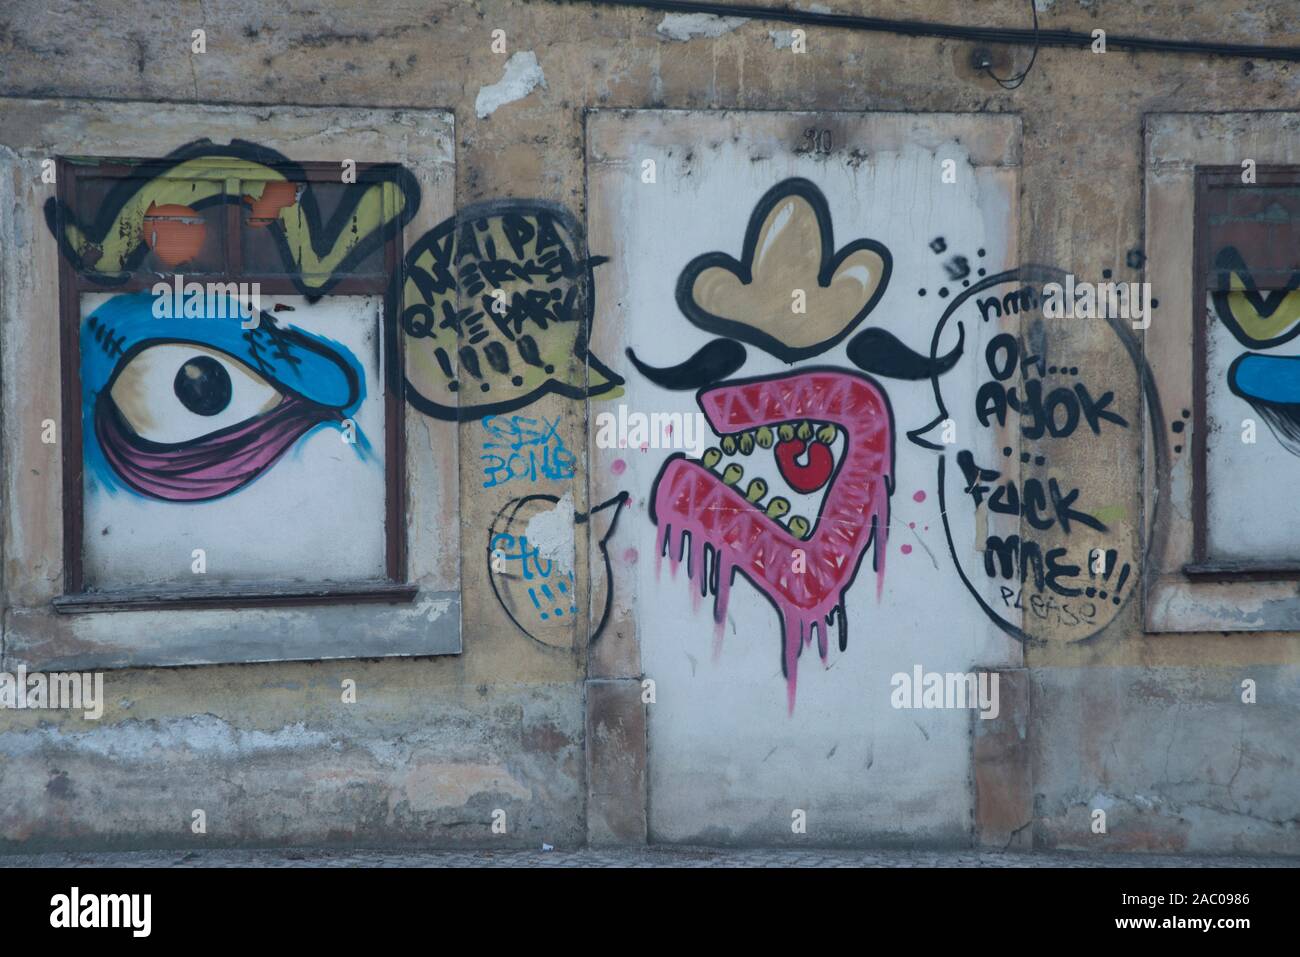 Coimbra Street art and graffiti Stock Photo